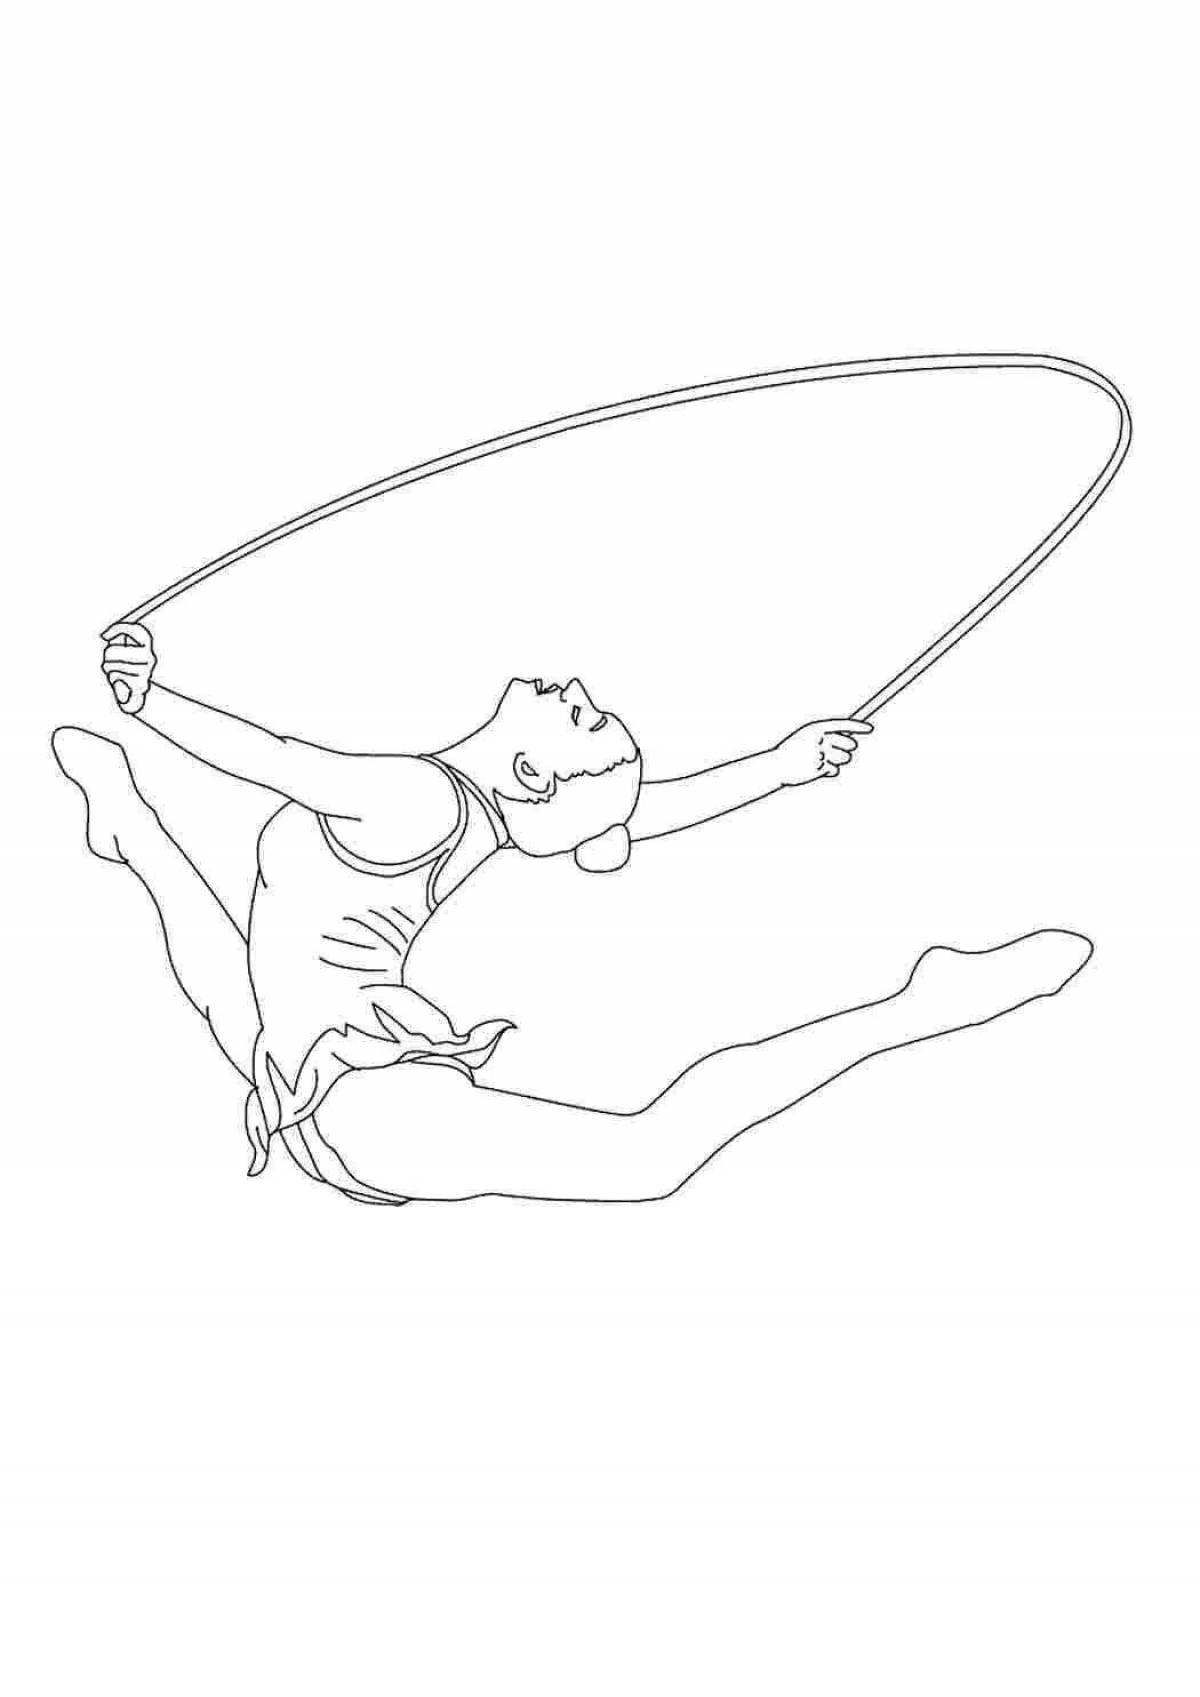 Раскраска гимнастка на растяжке